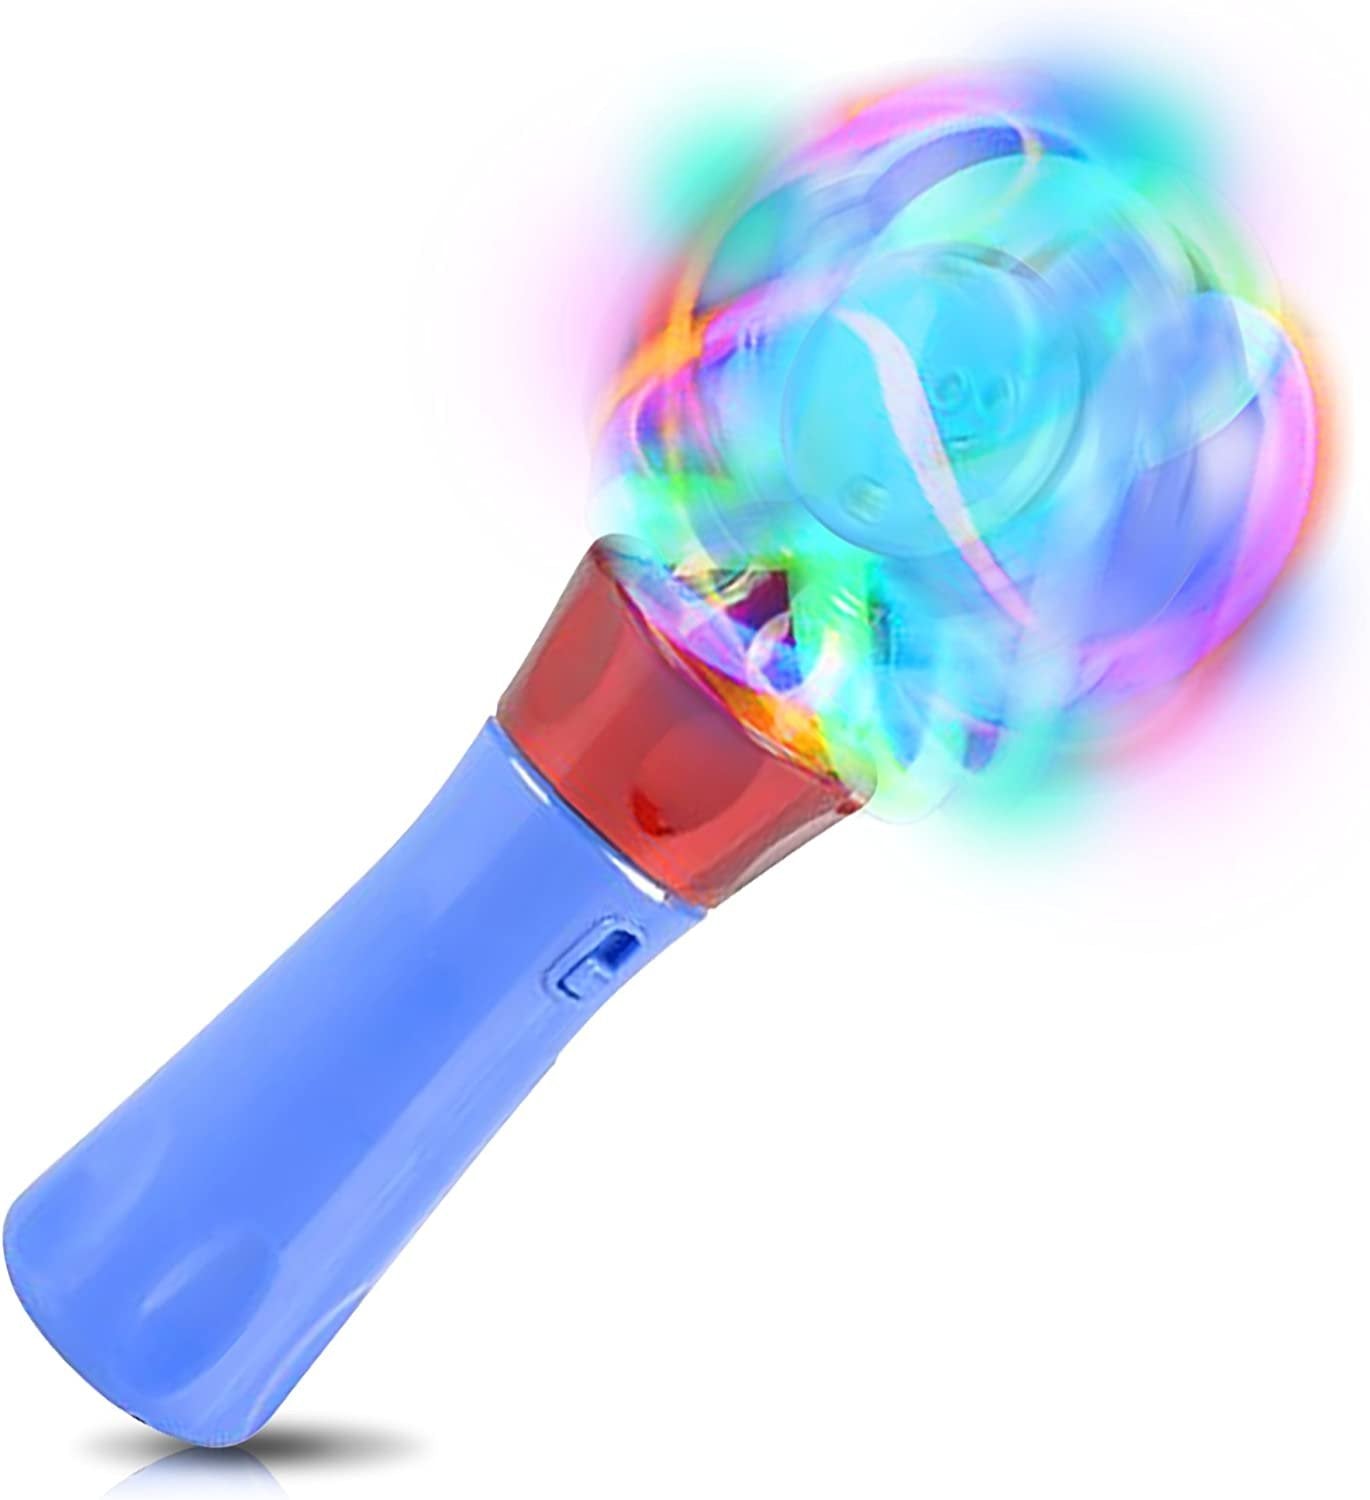 spinning light wand